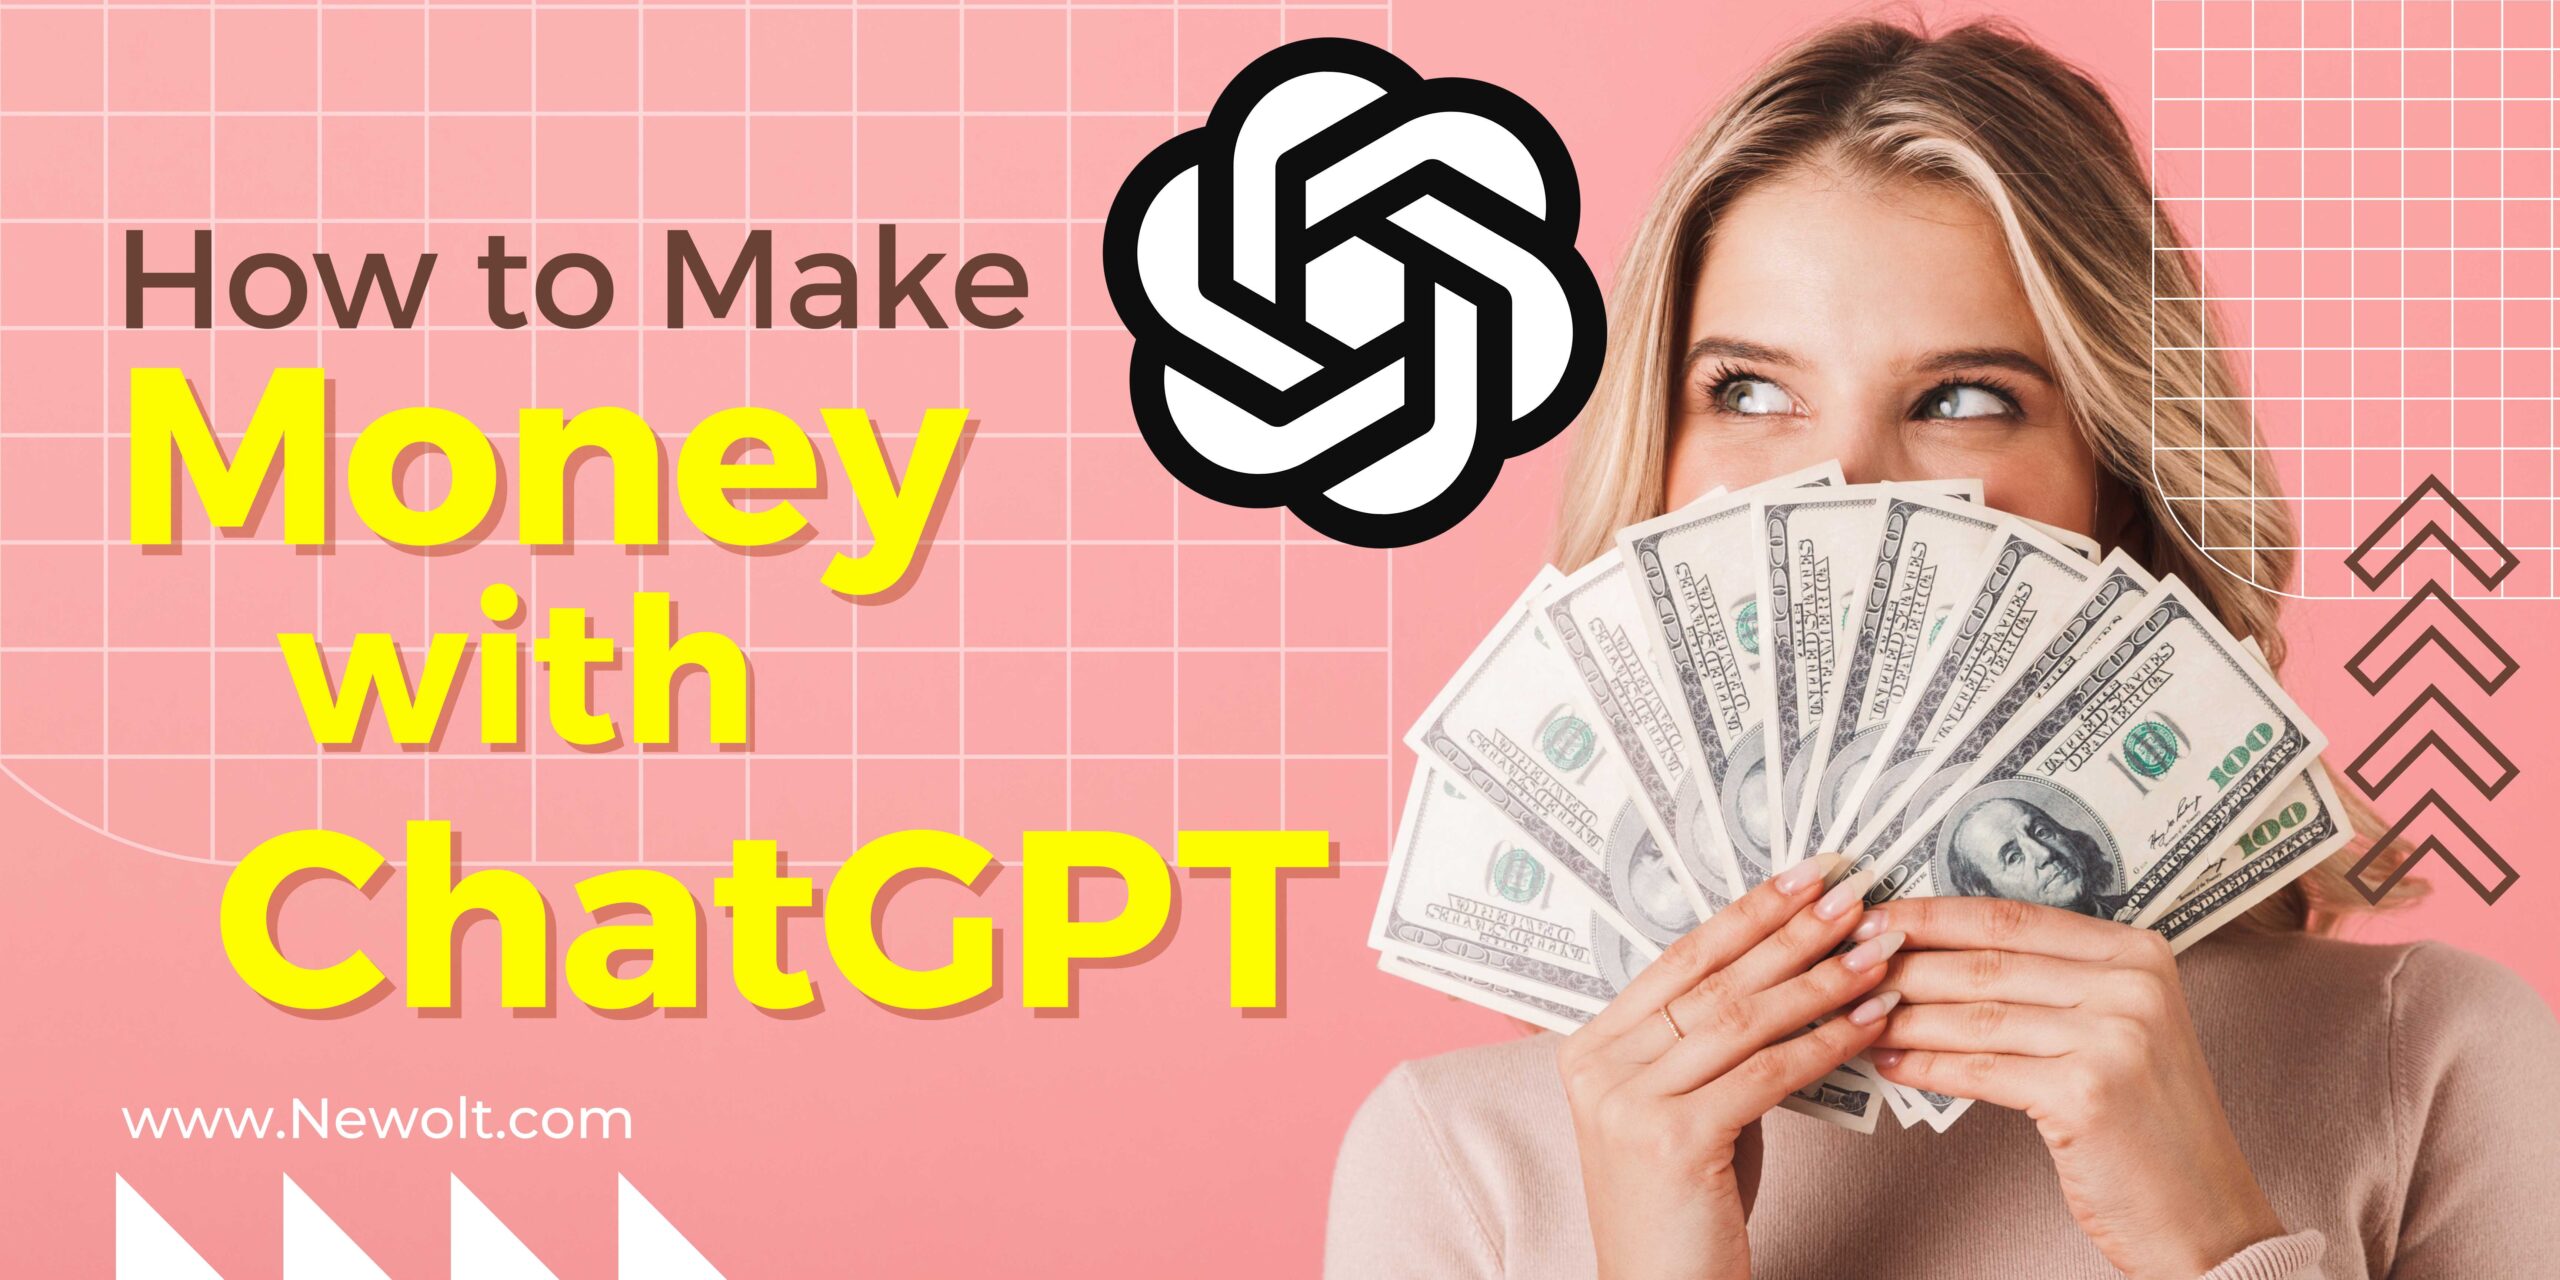 GENIUS Ways to Make Money with ChatGPT